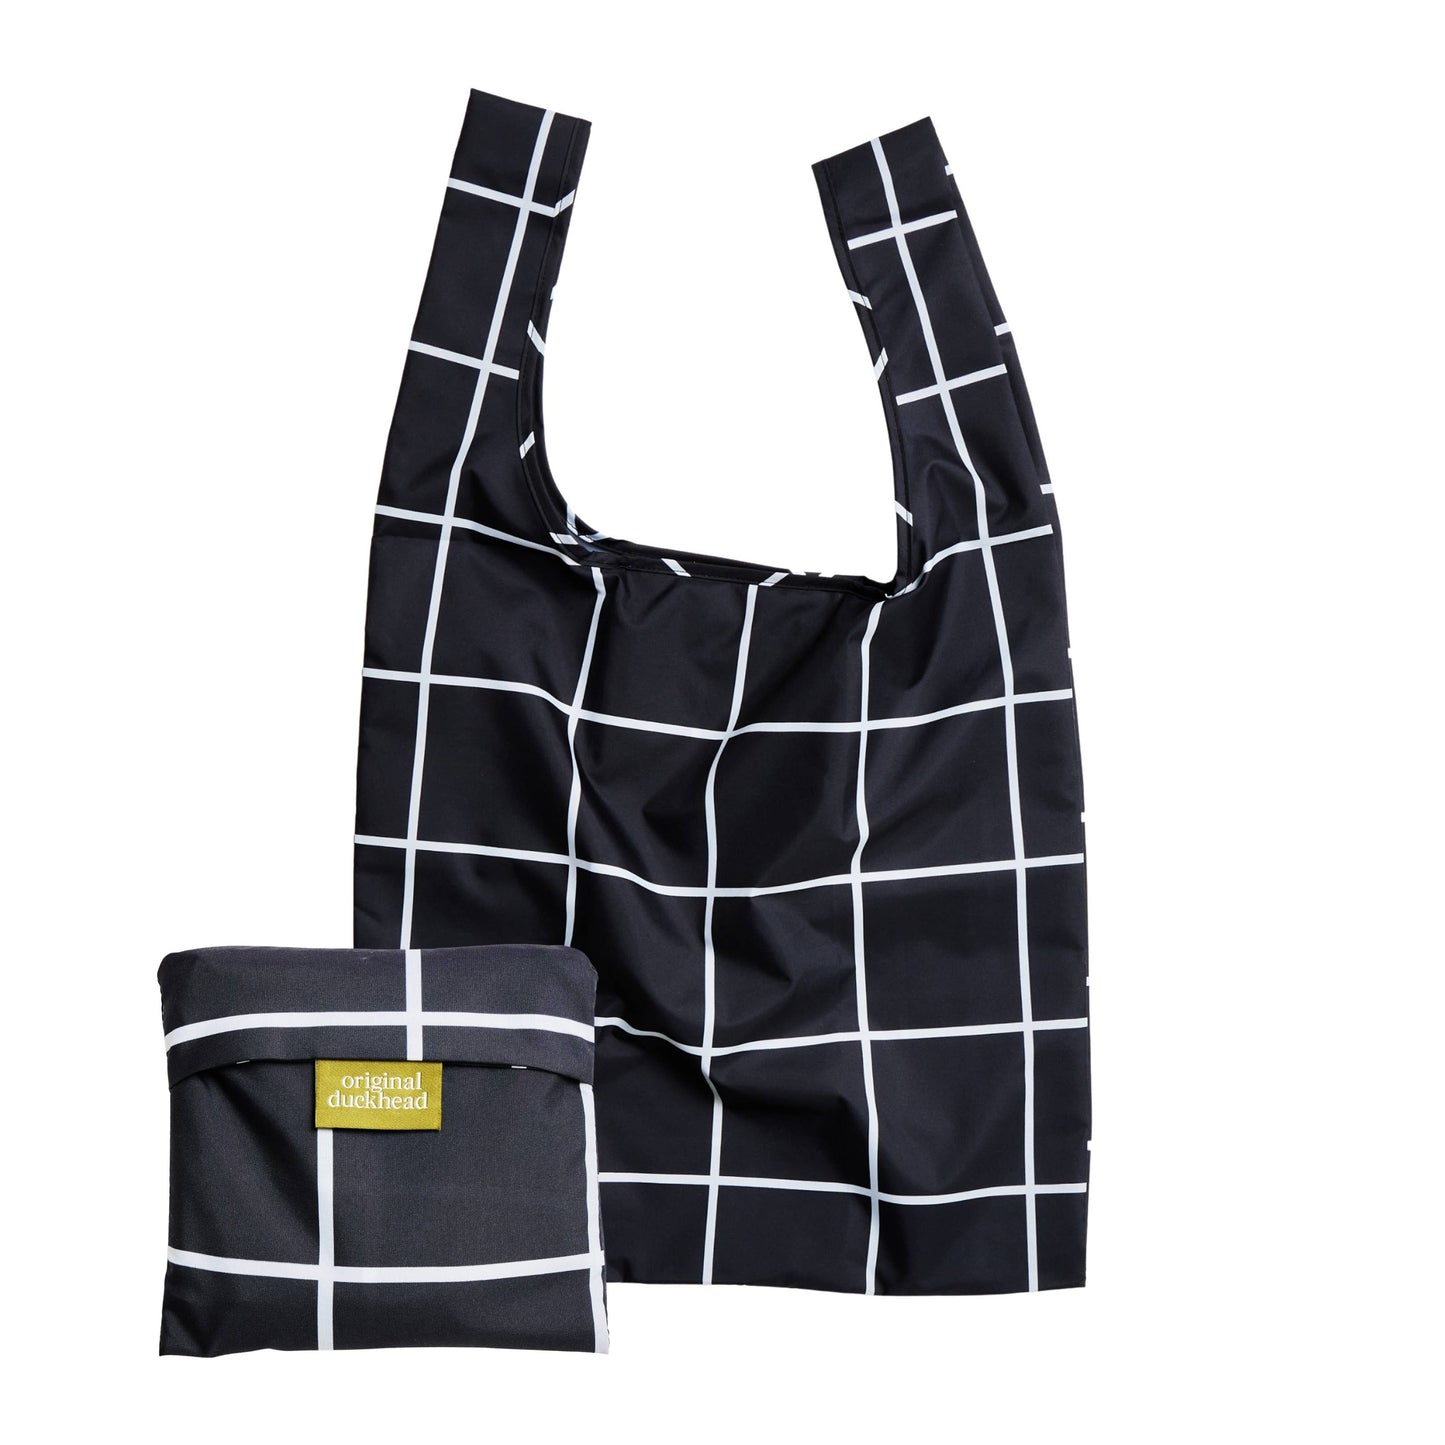 Original Duckhead; Tote Bag (Black Grid, Eco Friendly, Upcycled)